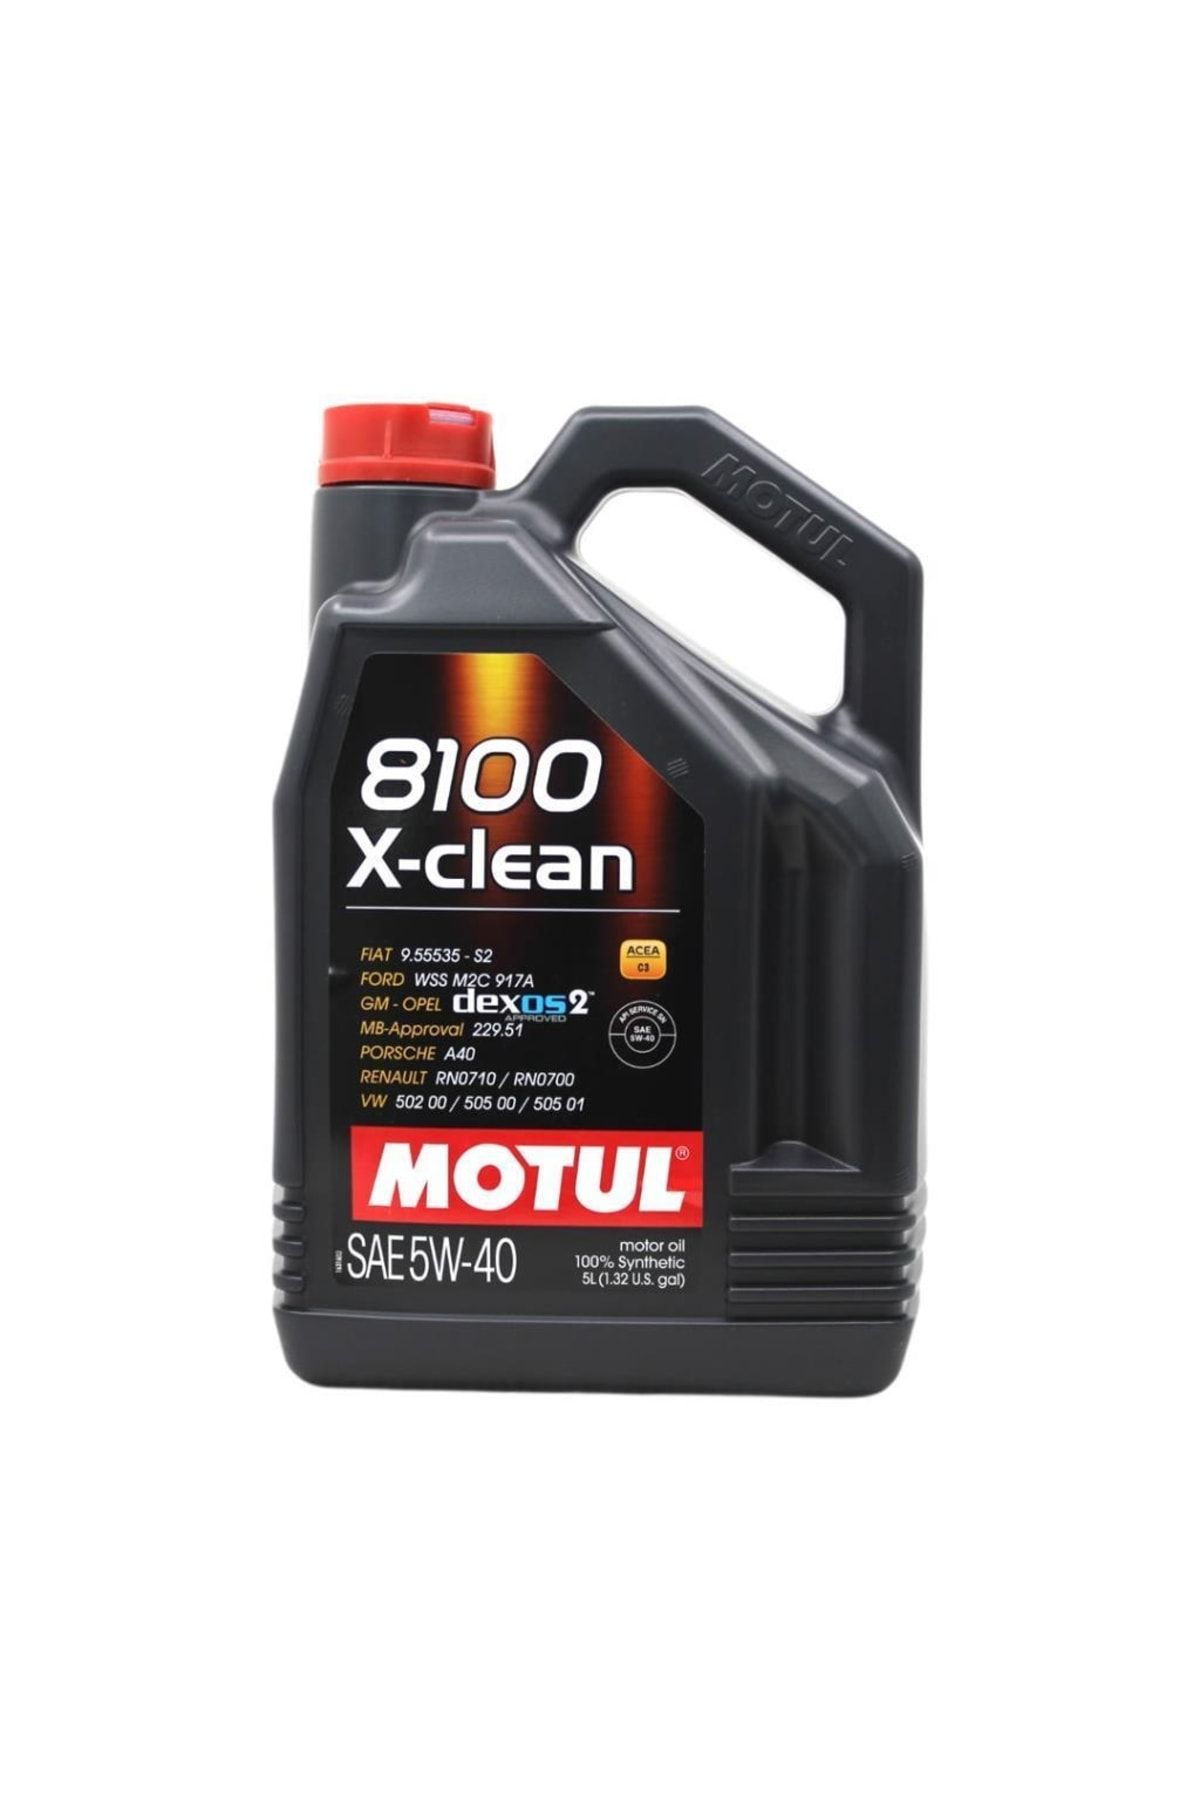 Motul 8100 X-clean 5w40 5 Litre